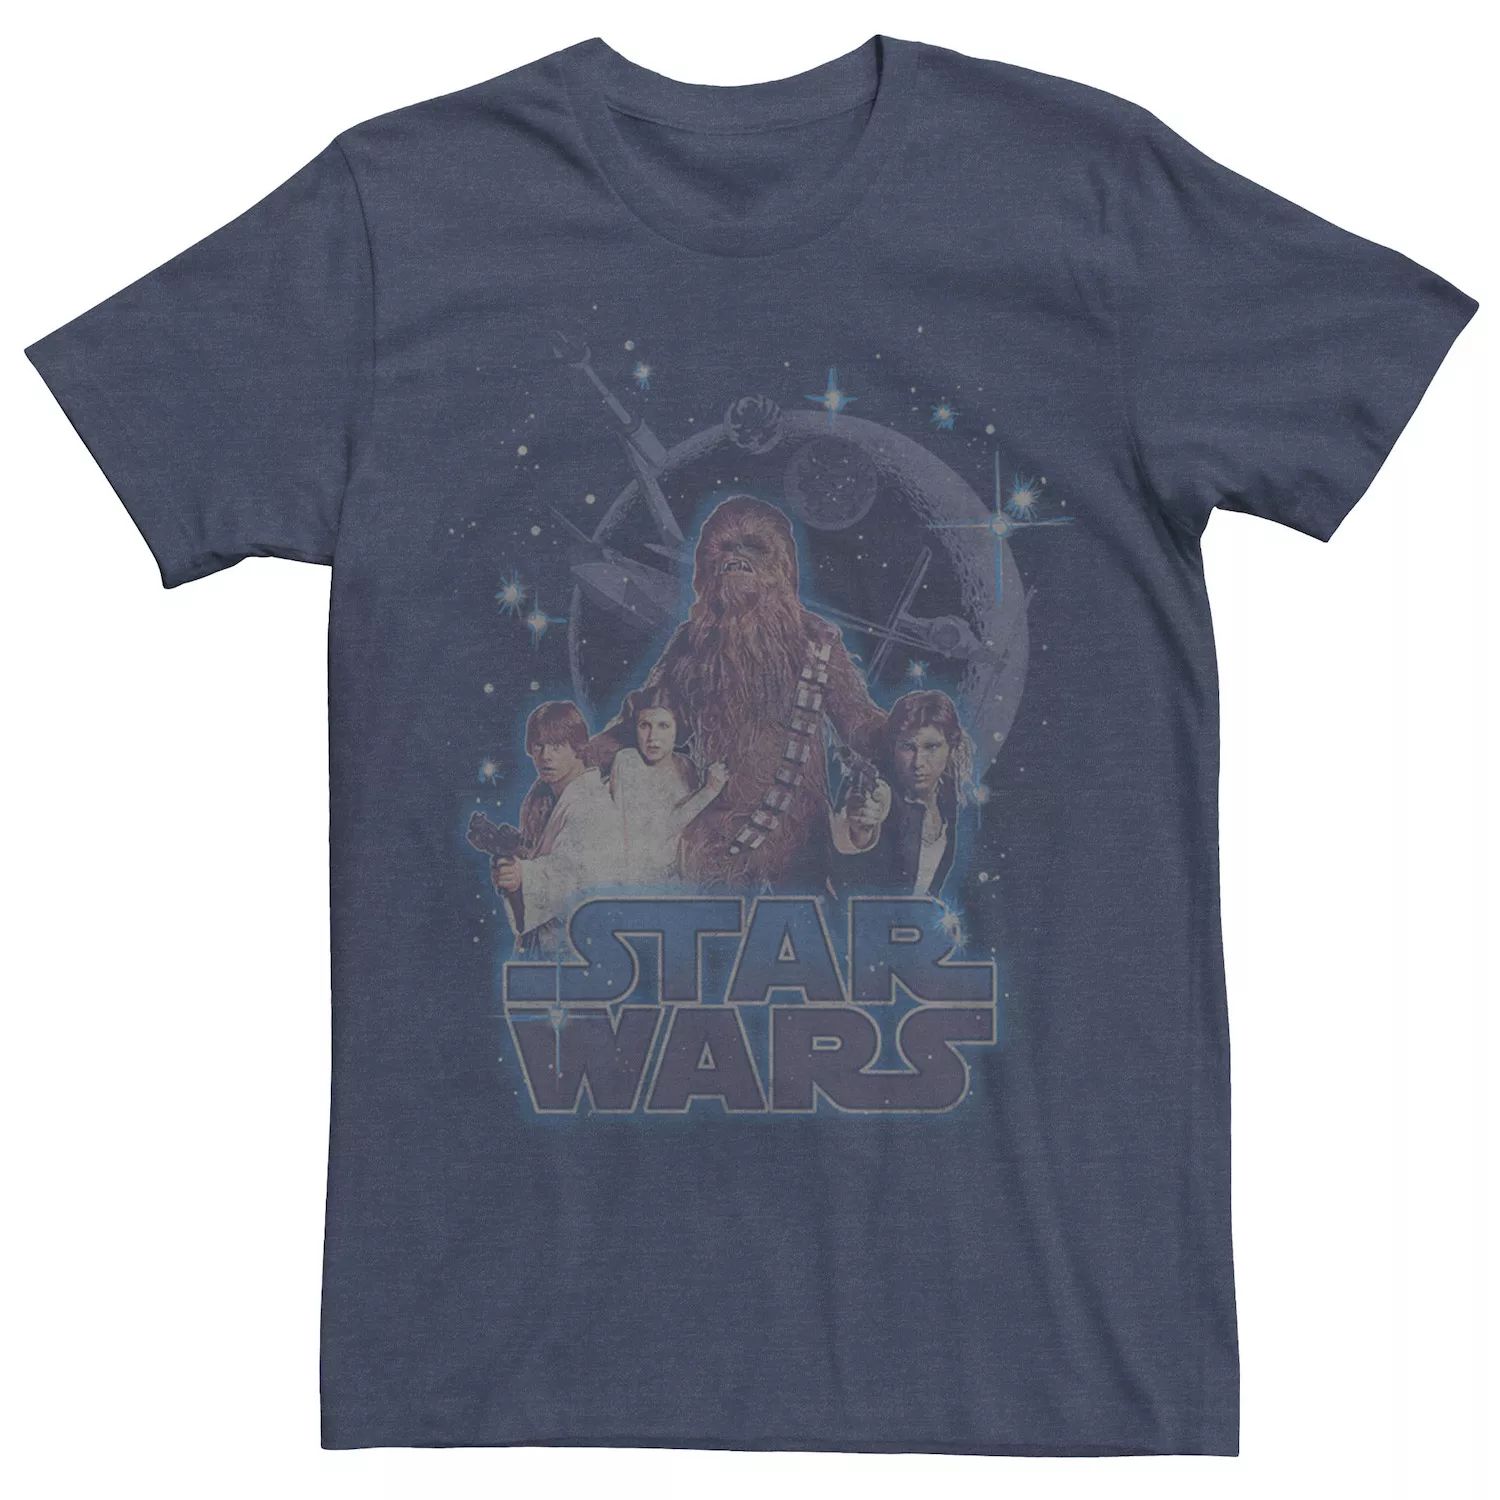 Мужская футболка с рисунком Cool Crusaders Star Wars